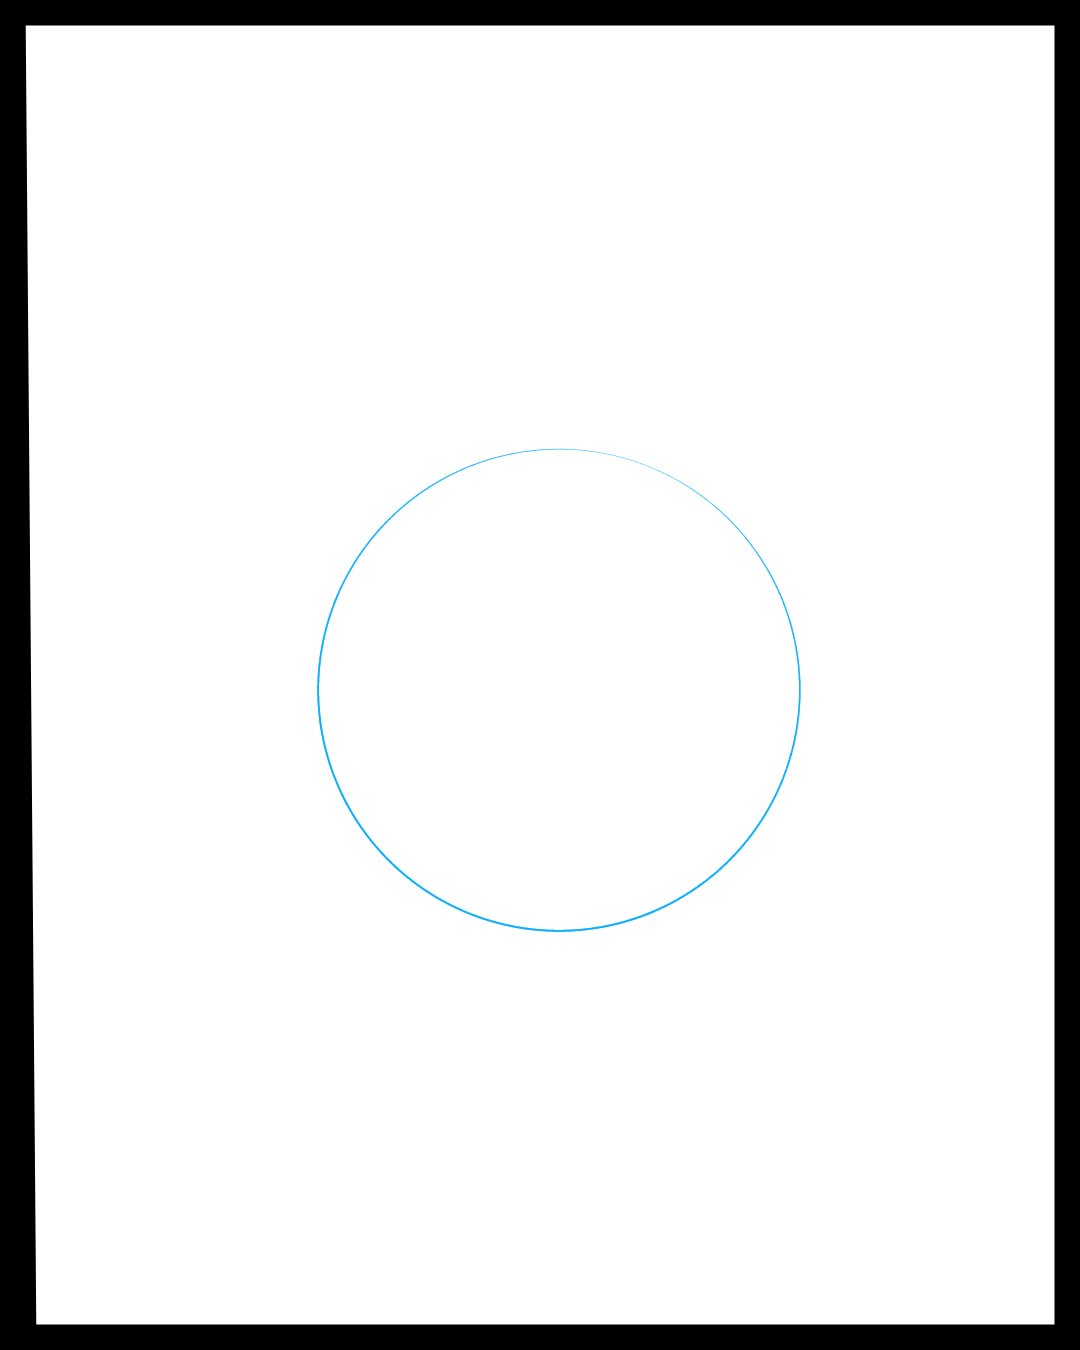 Step 1 (Draw a circle)